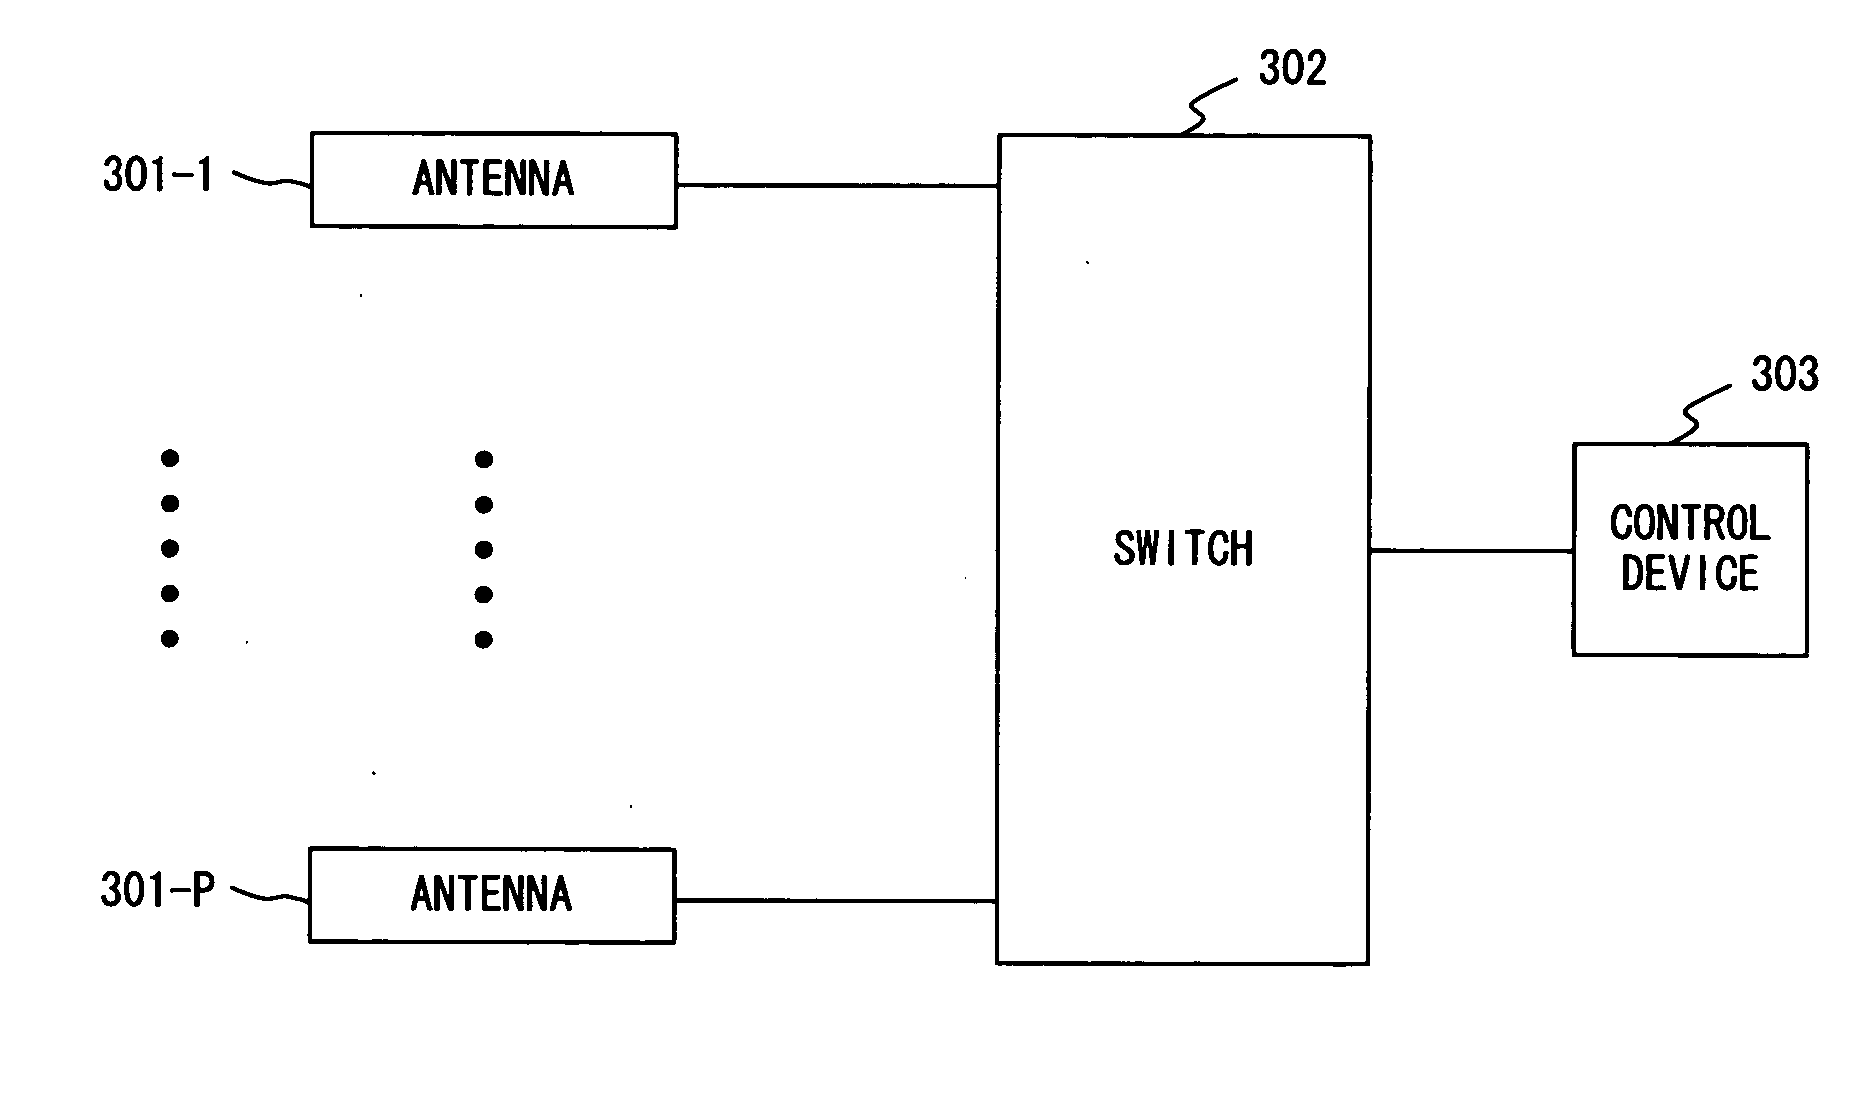 Multiple input multiple output communication apparatus